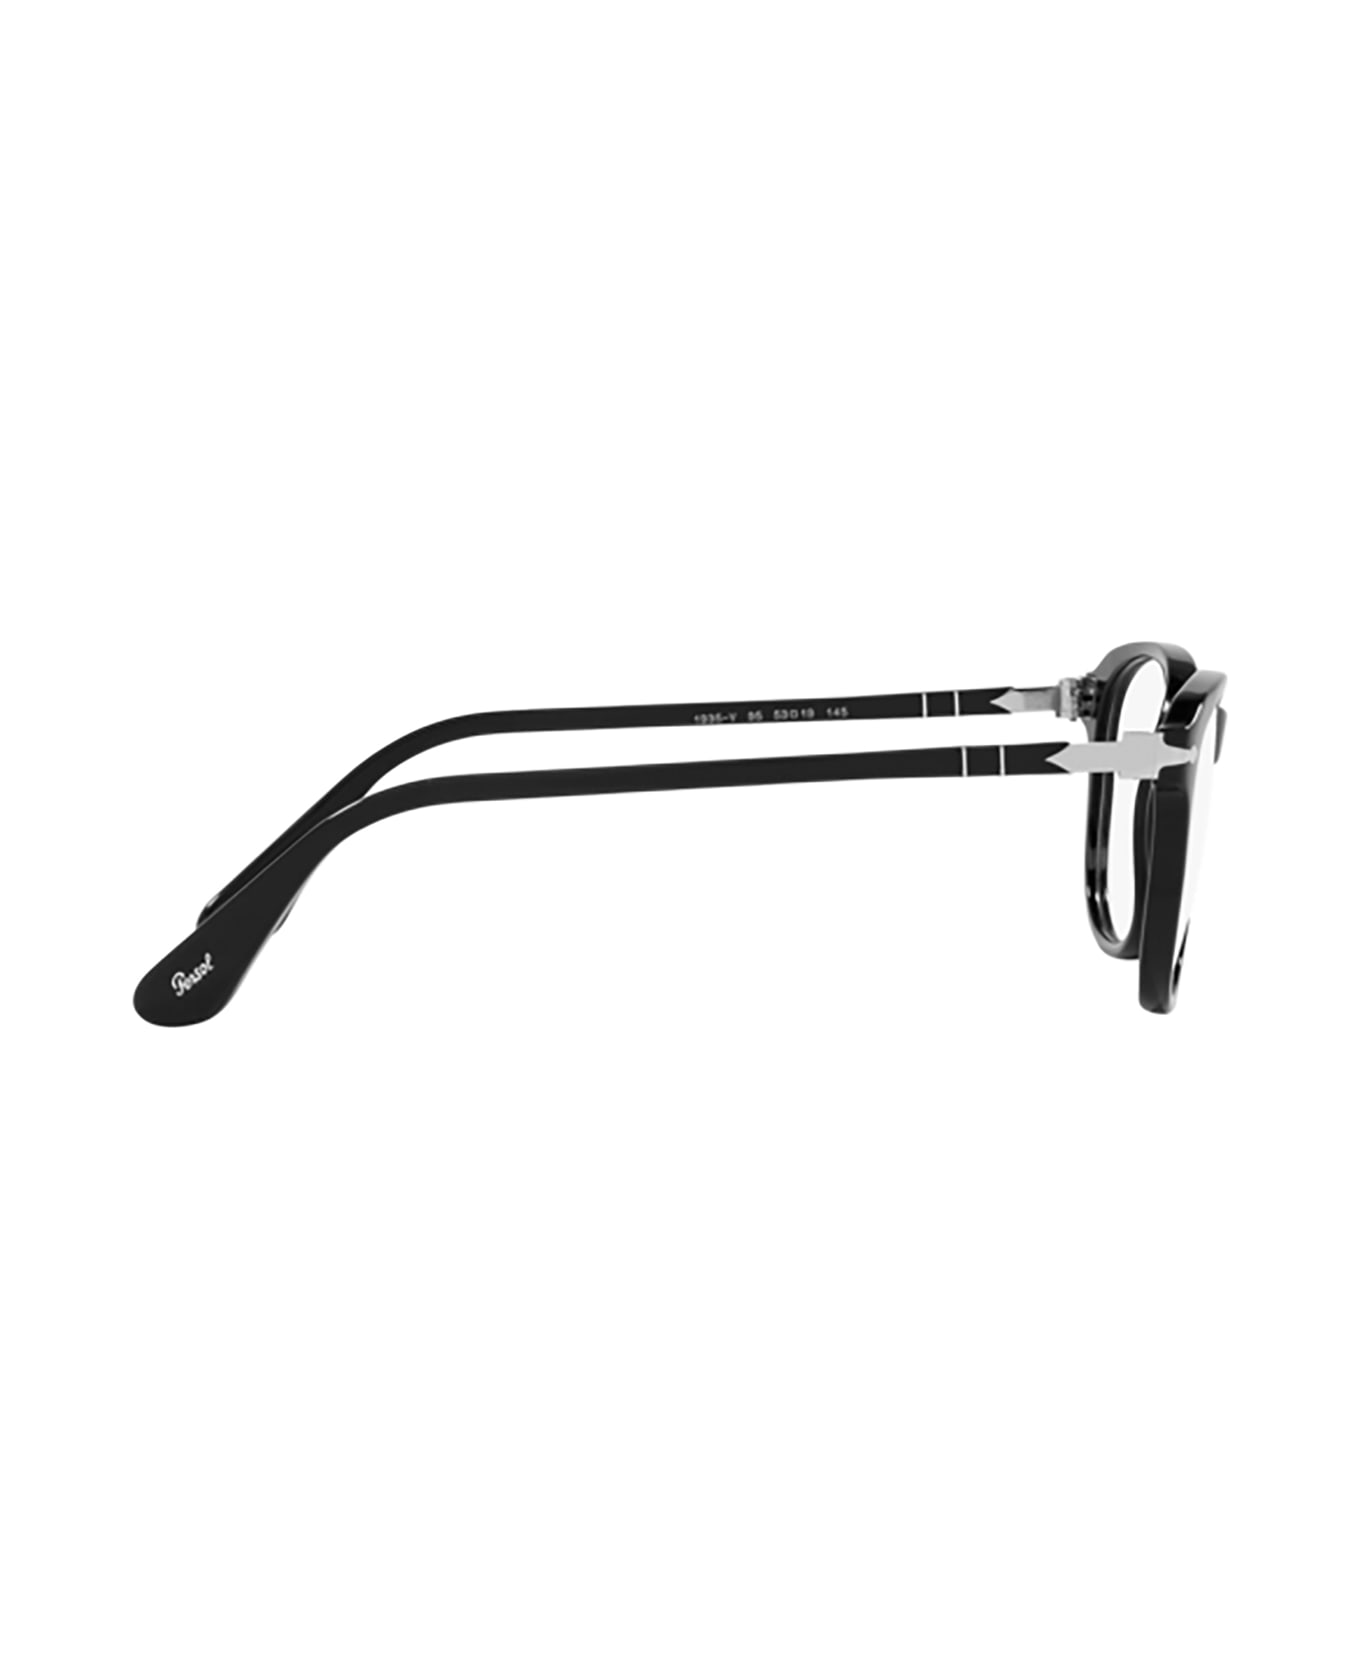 Persol Po1935v Black Glasses - Black アイウェア